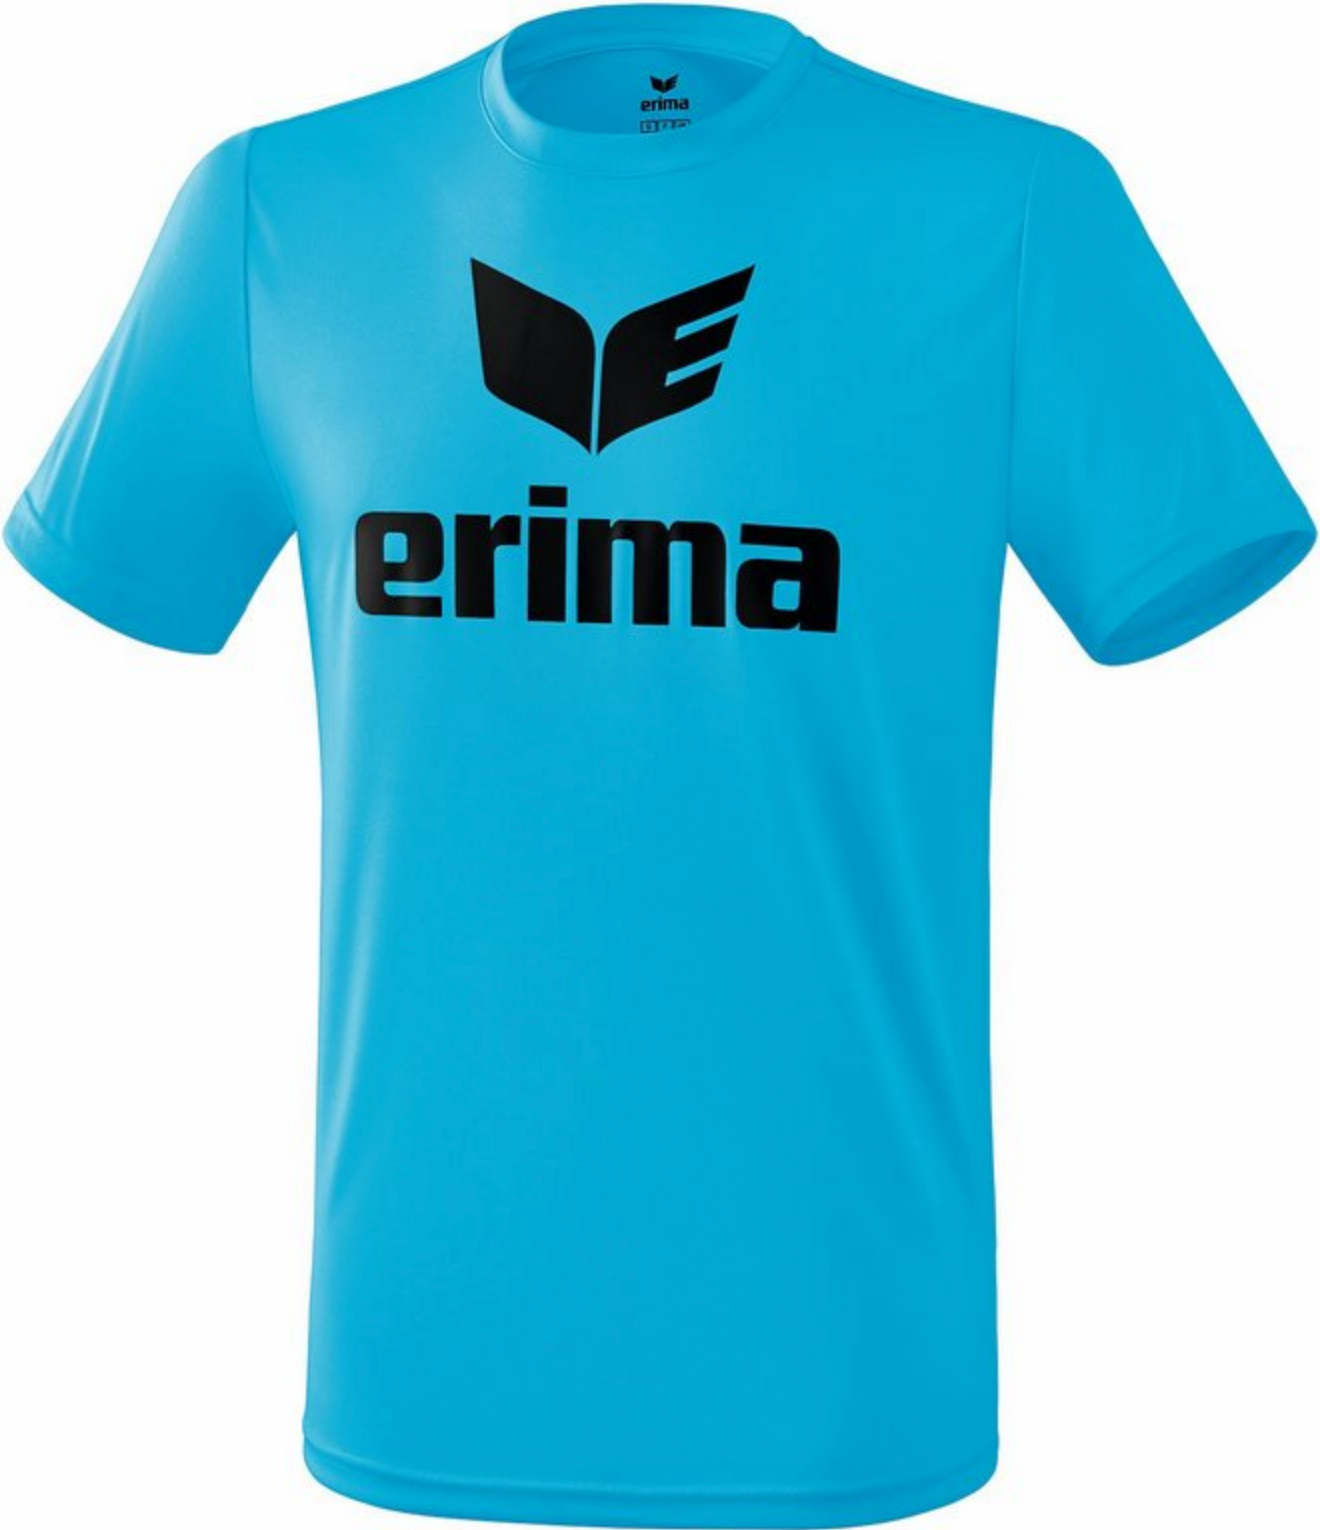 Outlet Str. X-Large ERIMA t-shirt